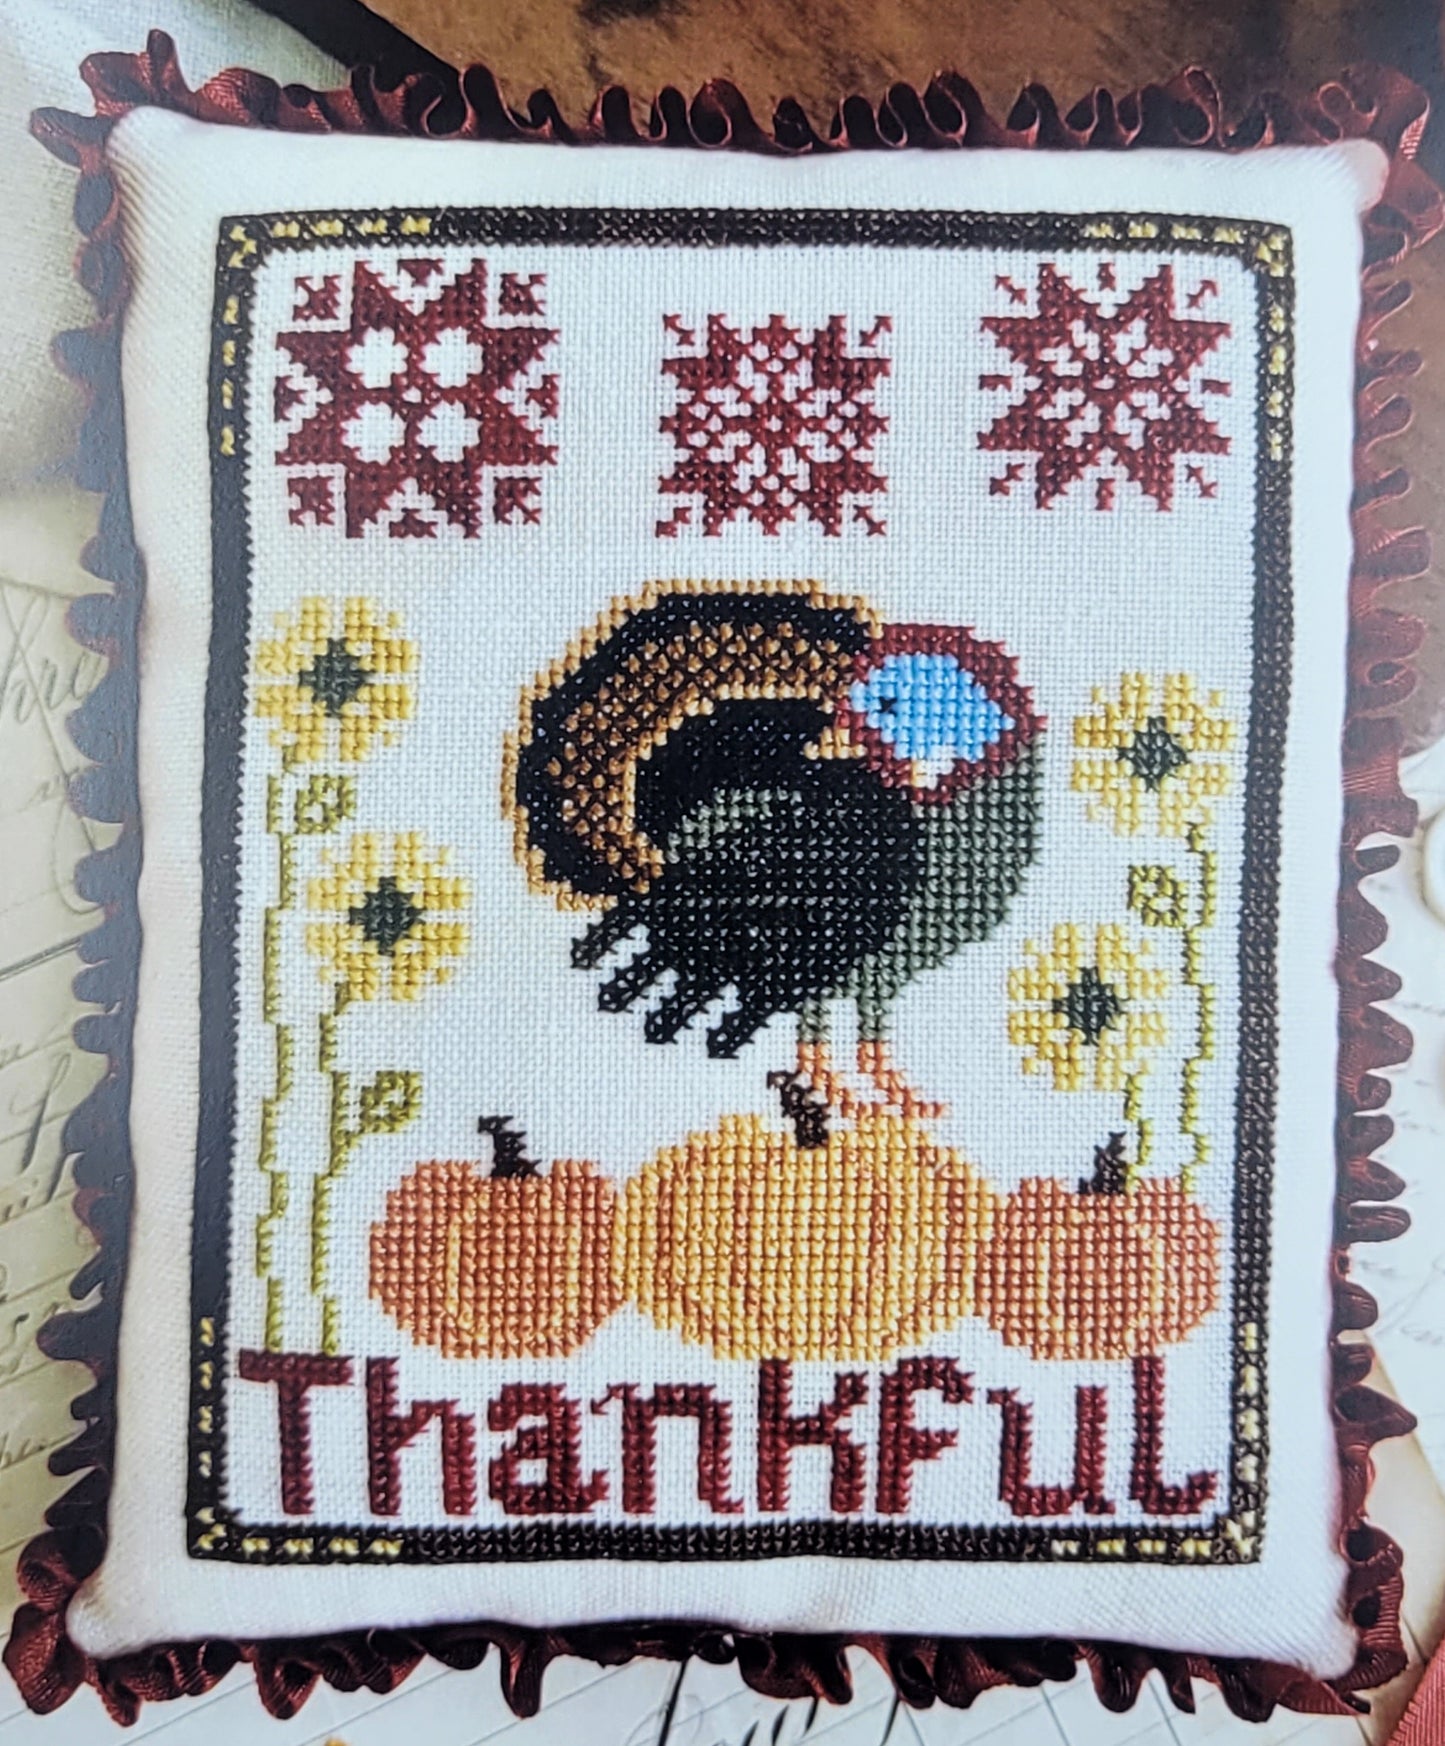 A Turkey's Thanks